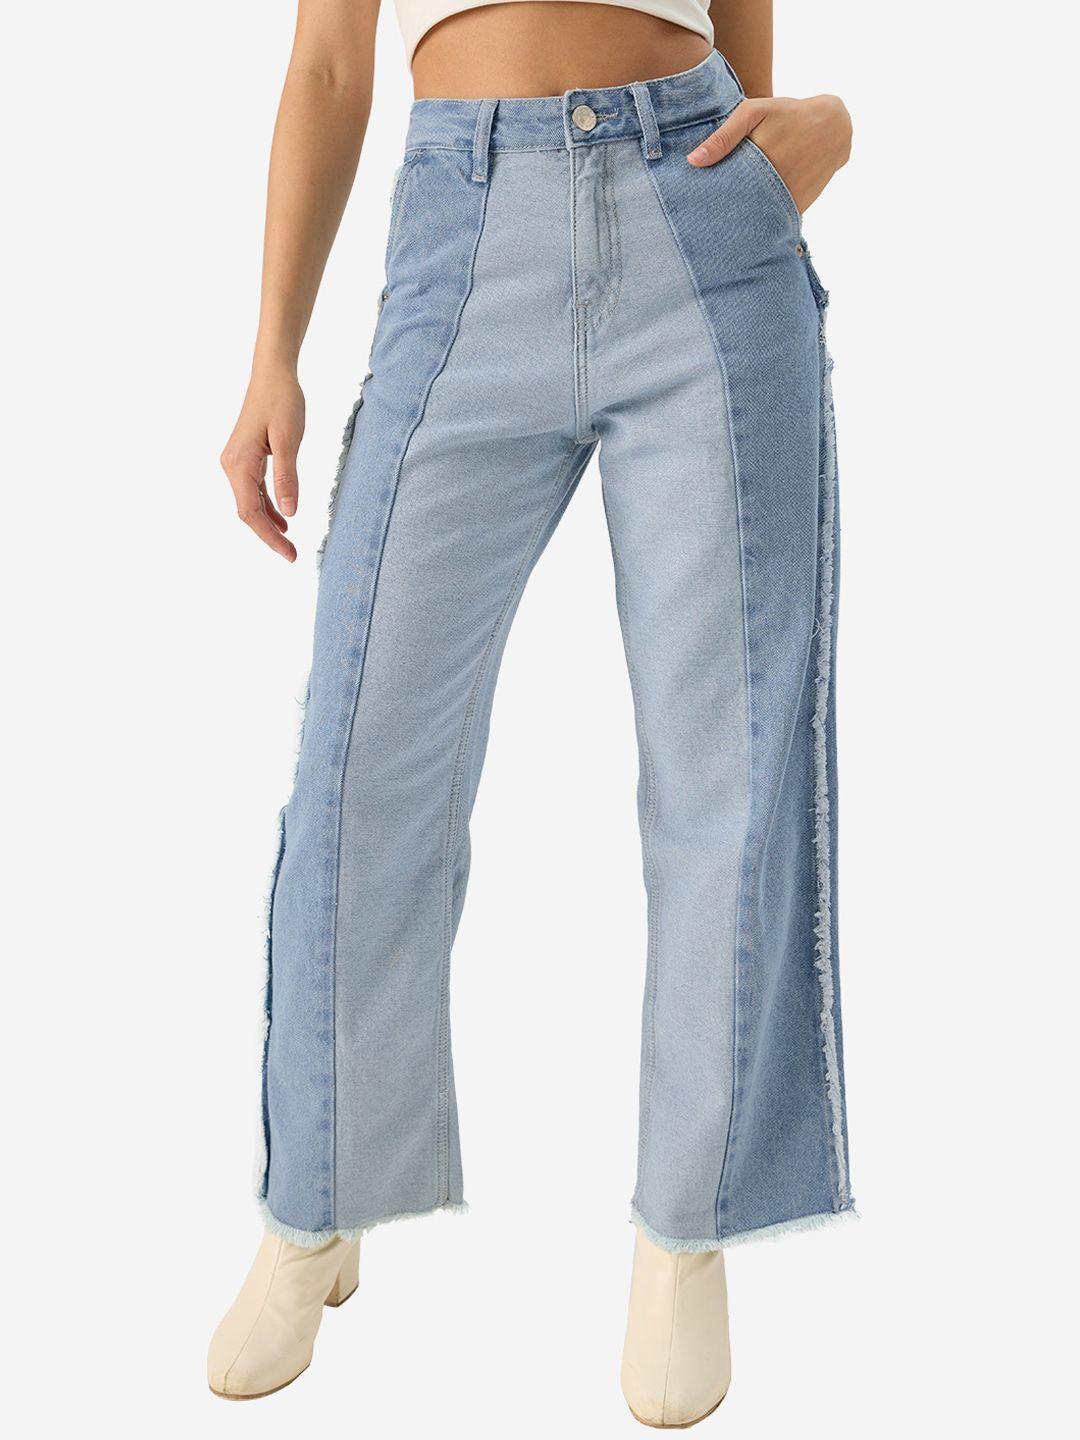 the souled store women blue wide leg jeans